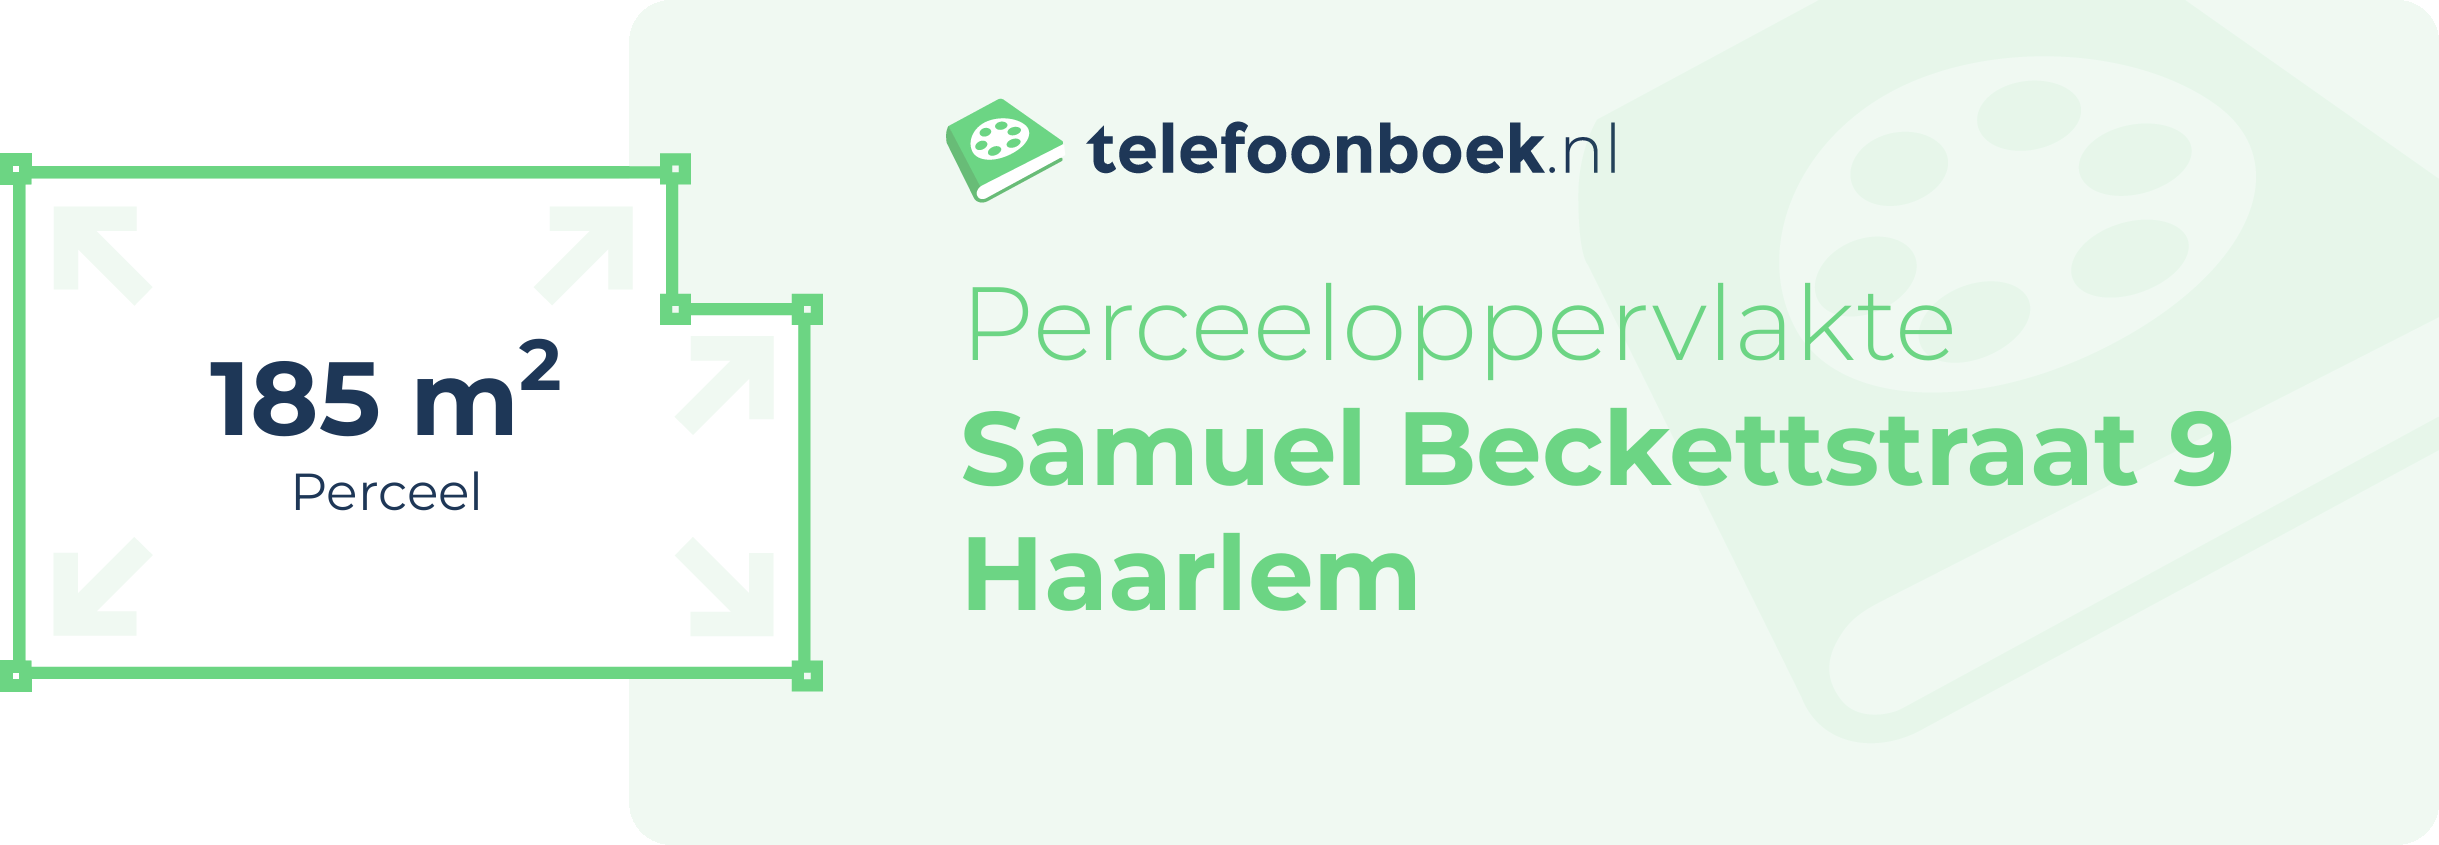 Perceeloppervlakte Samuel Beckettstraat 9 Haarlem